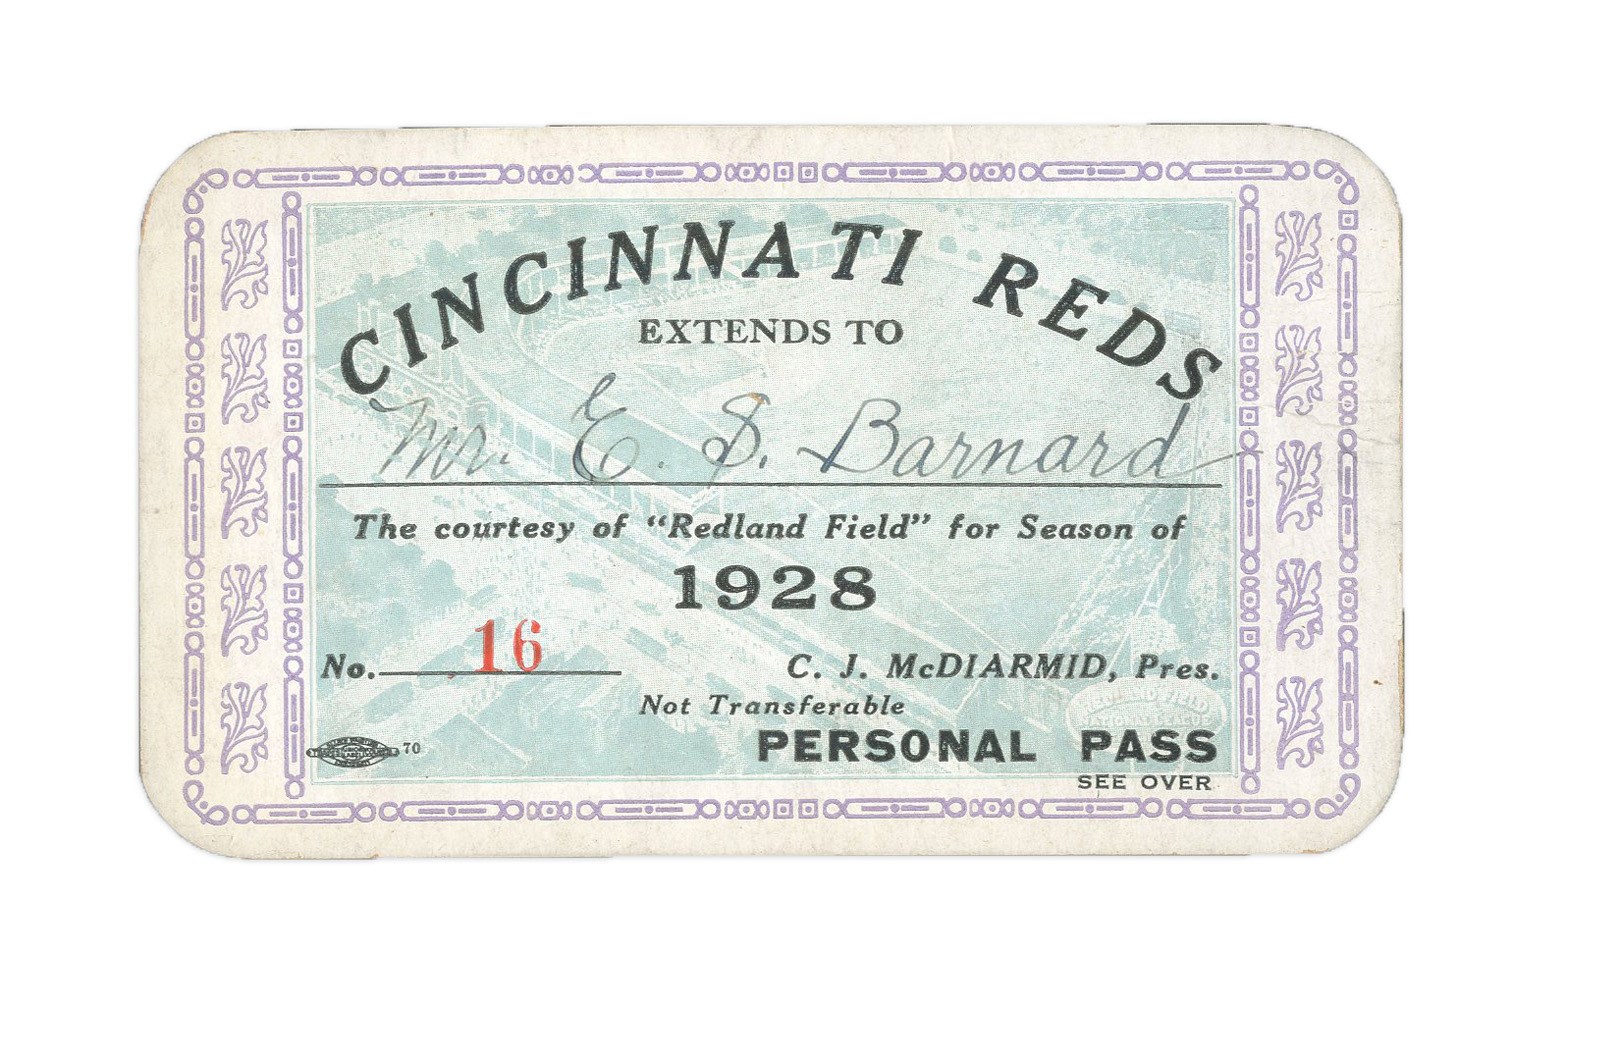 Pete Rose & Cincinnati Reds - 1928 Cincinnati Reds Pass Presented to President Ernest Barnard